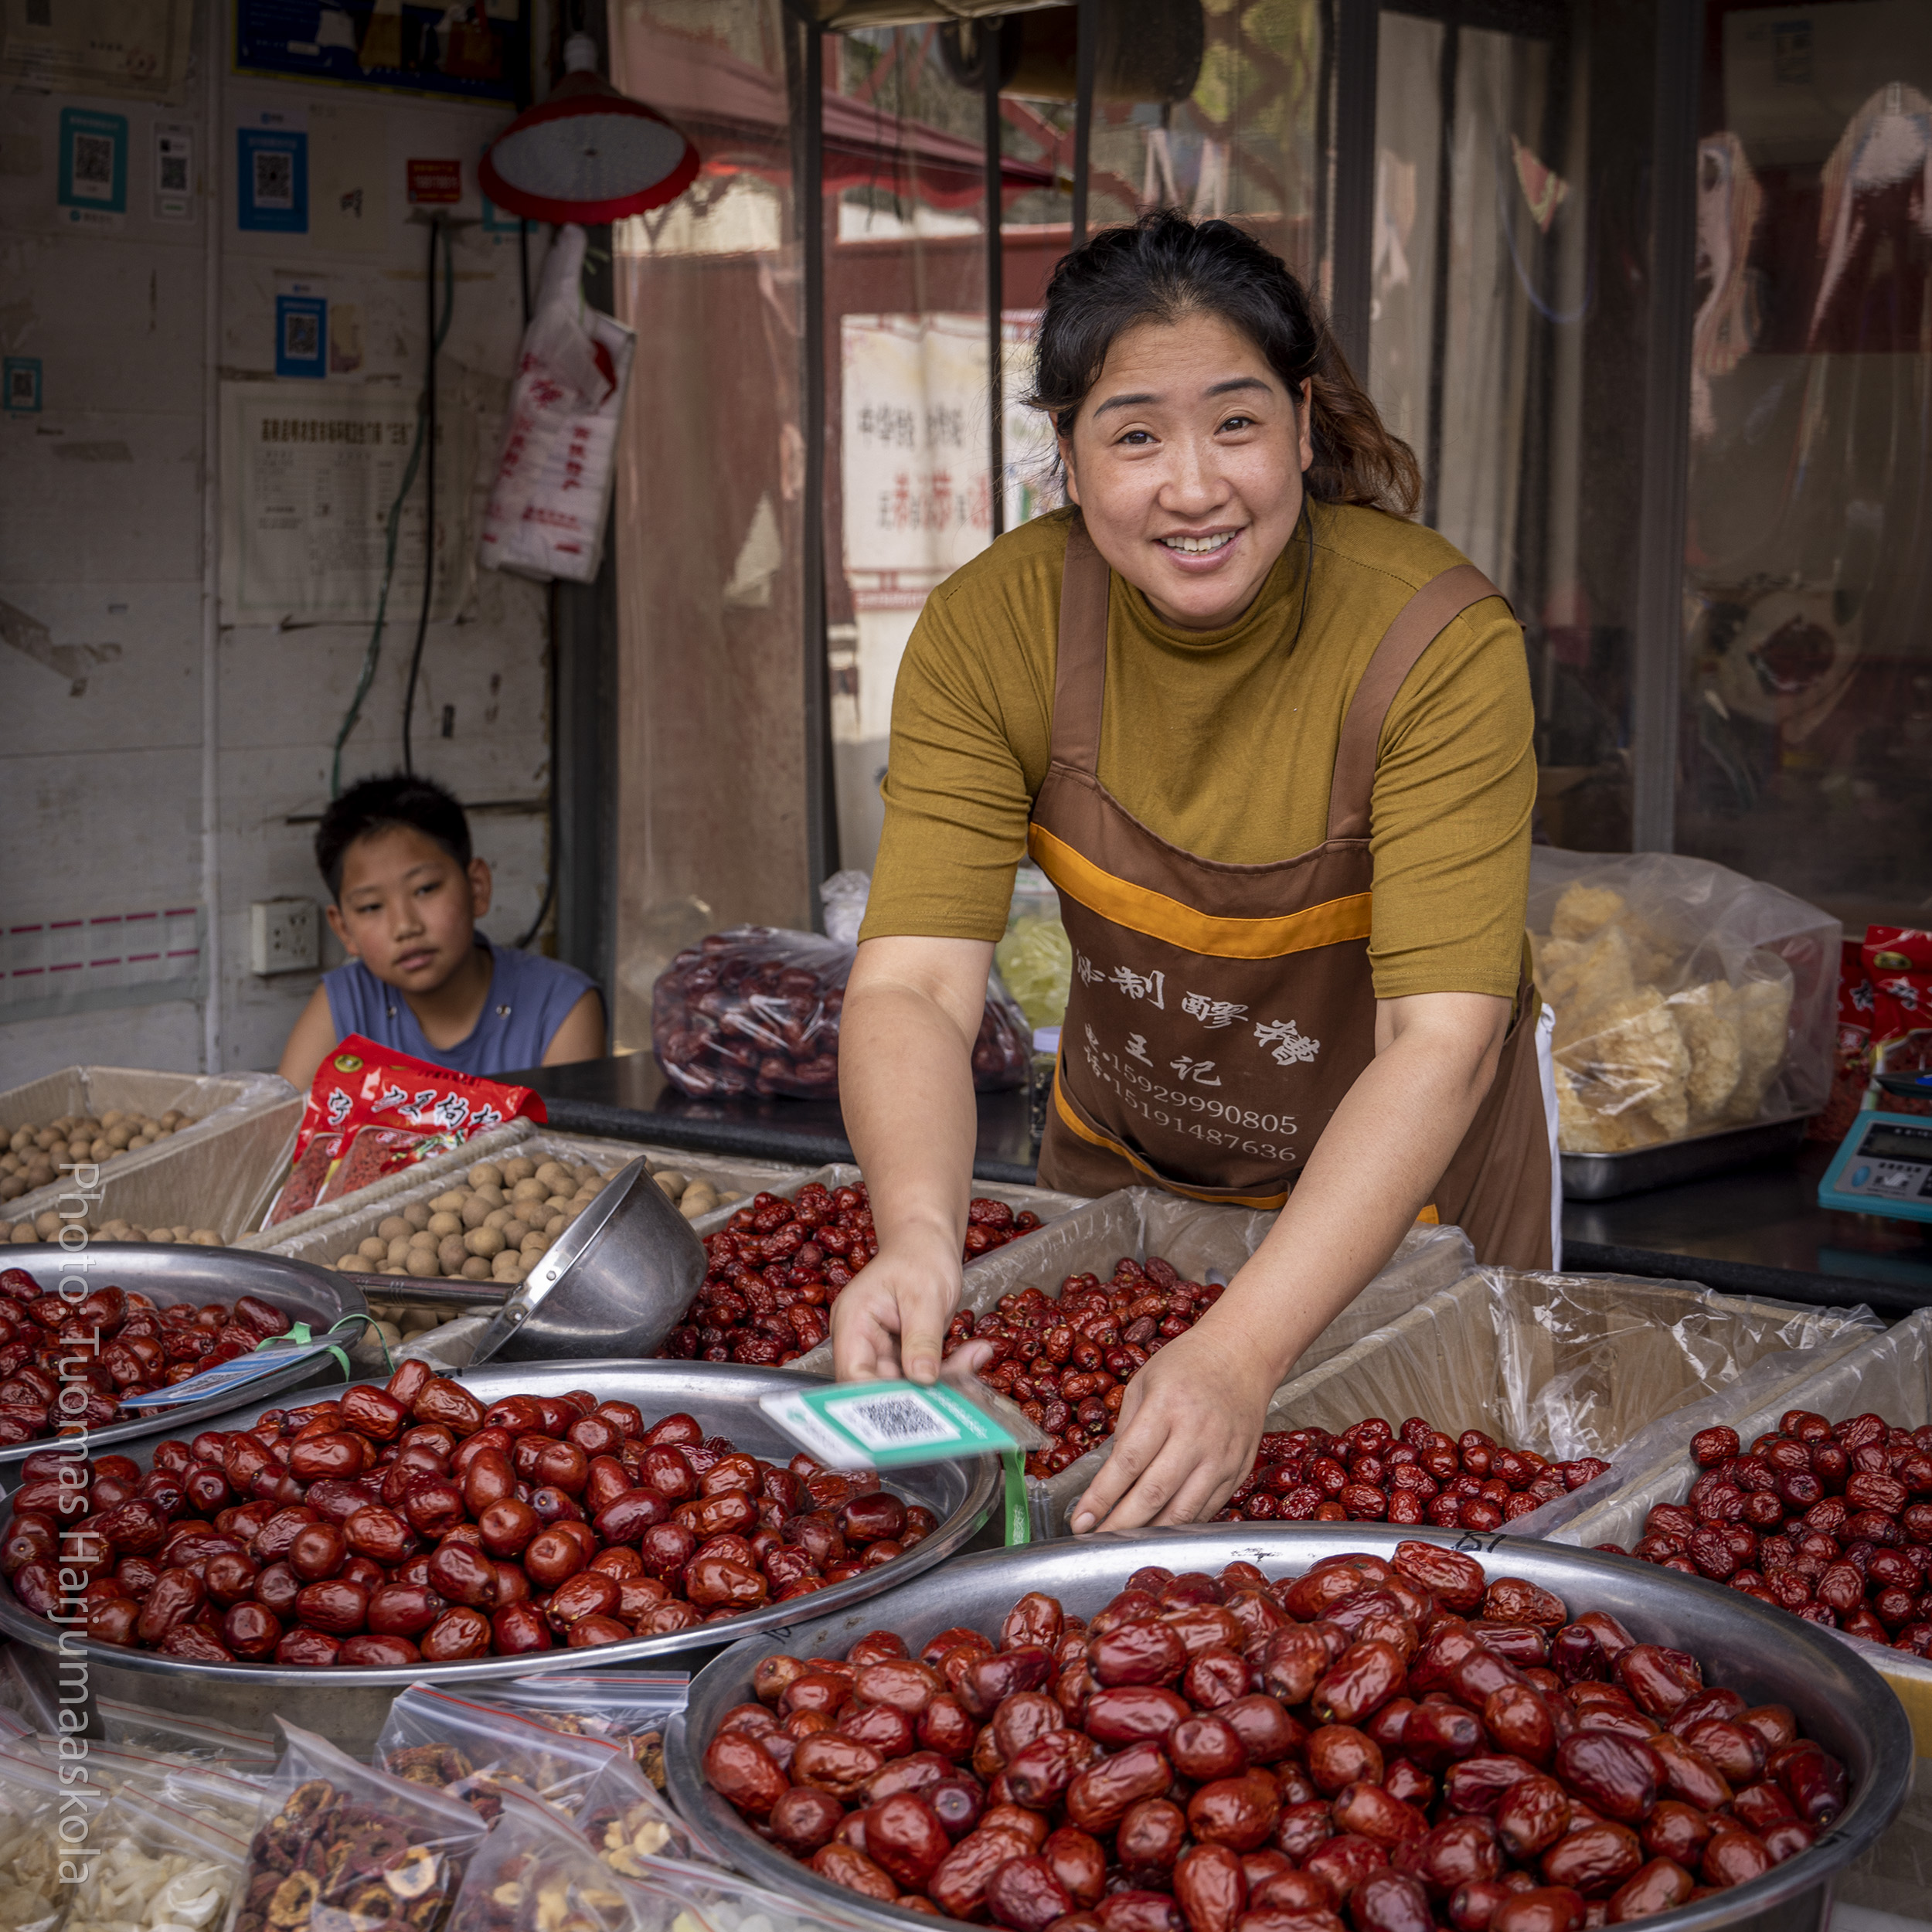 Chinese lady selling Chinese dates, jujubes, at a food market. Photographer by Tuomas Harjumaaskola.